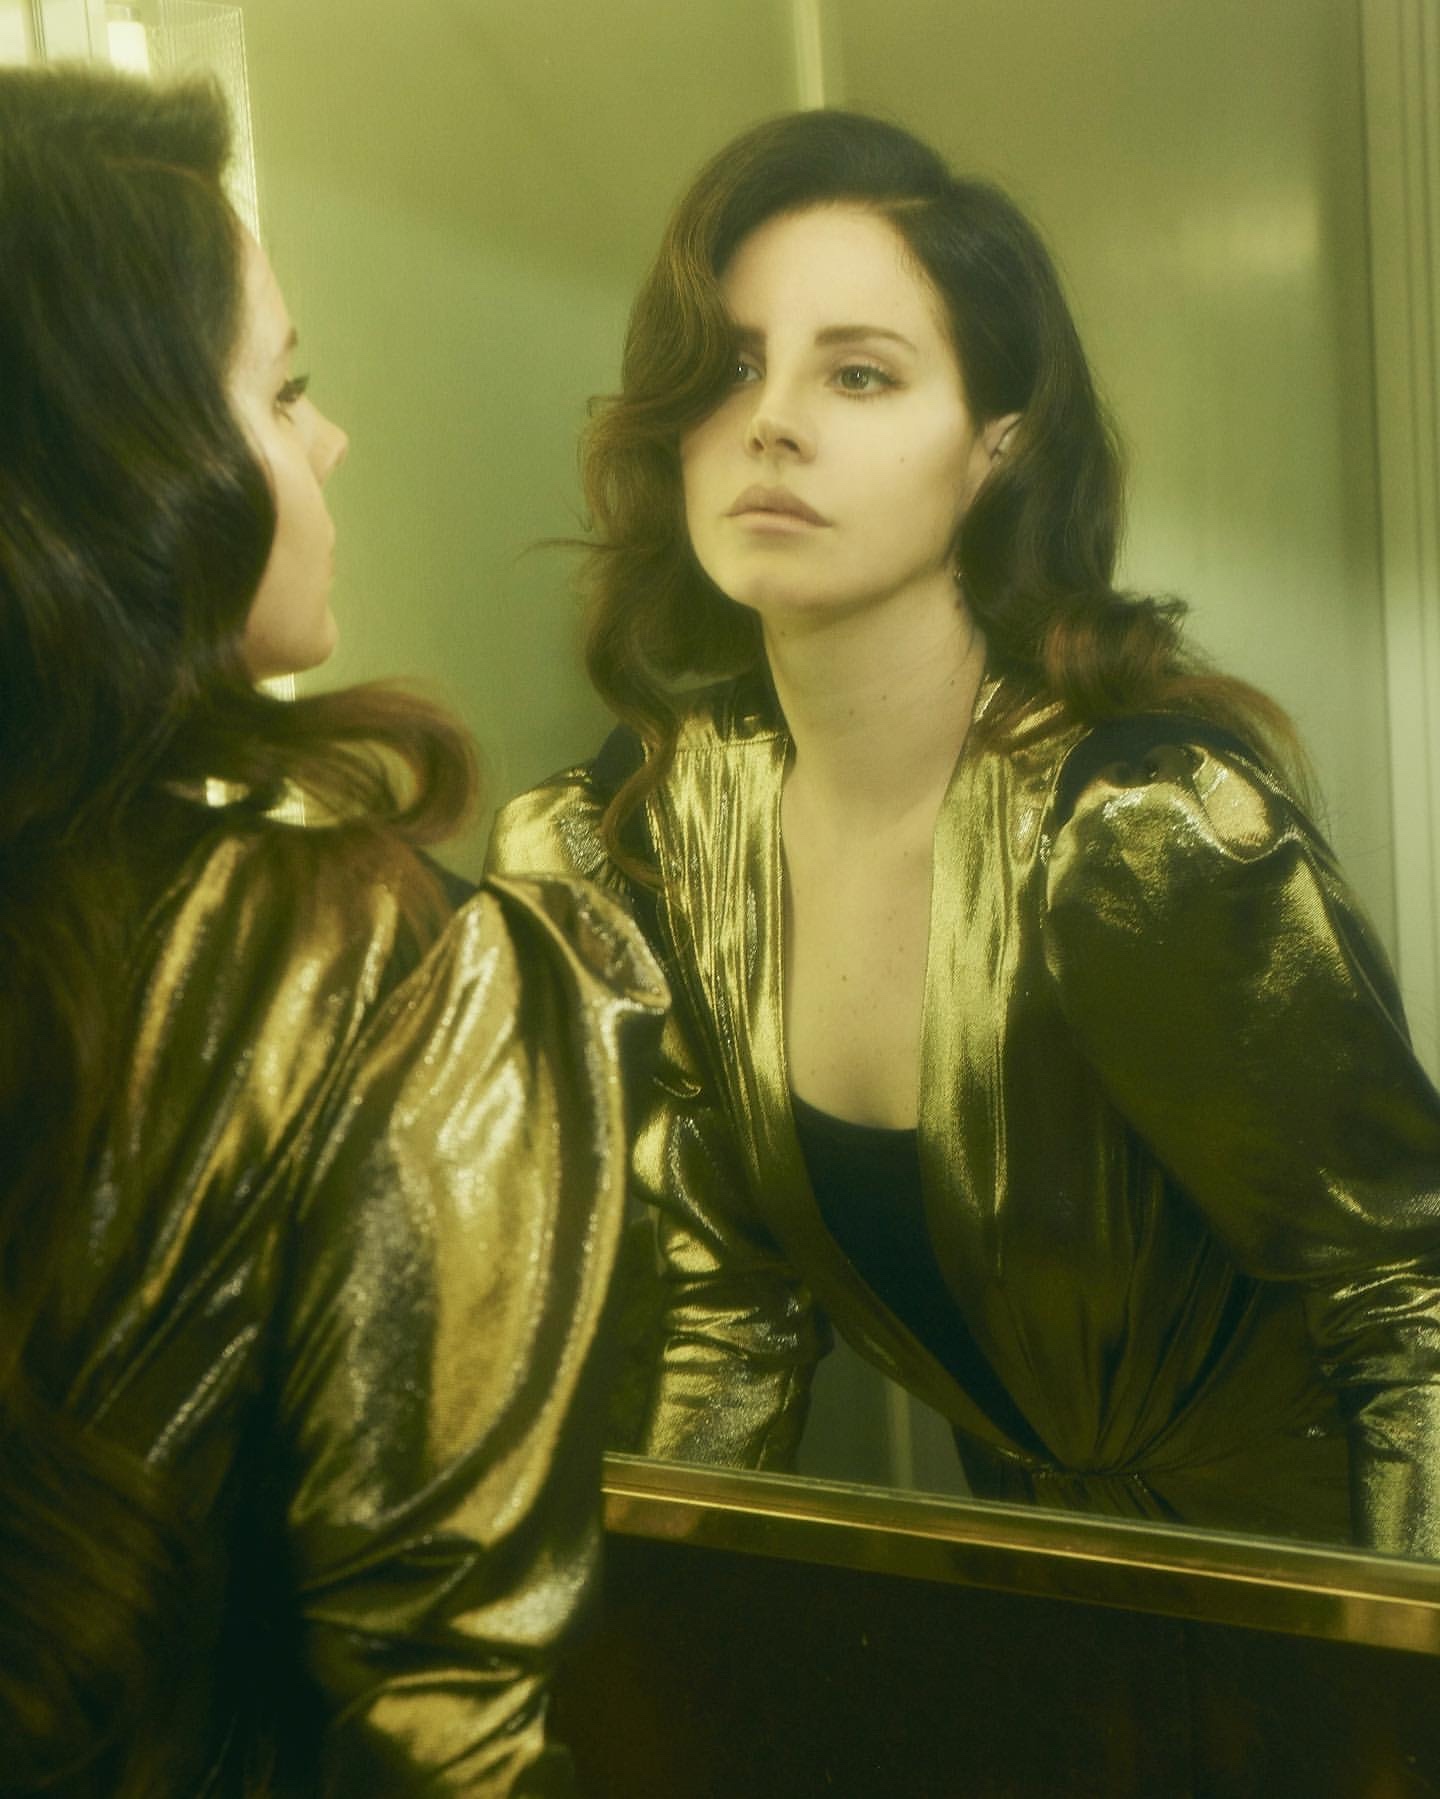 Lana Del Rey photo #963941